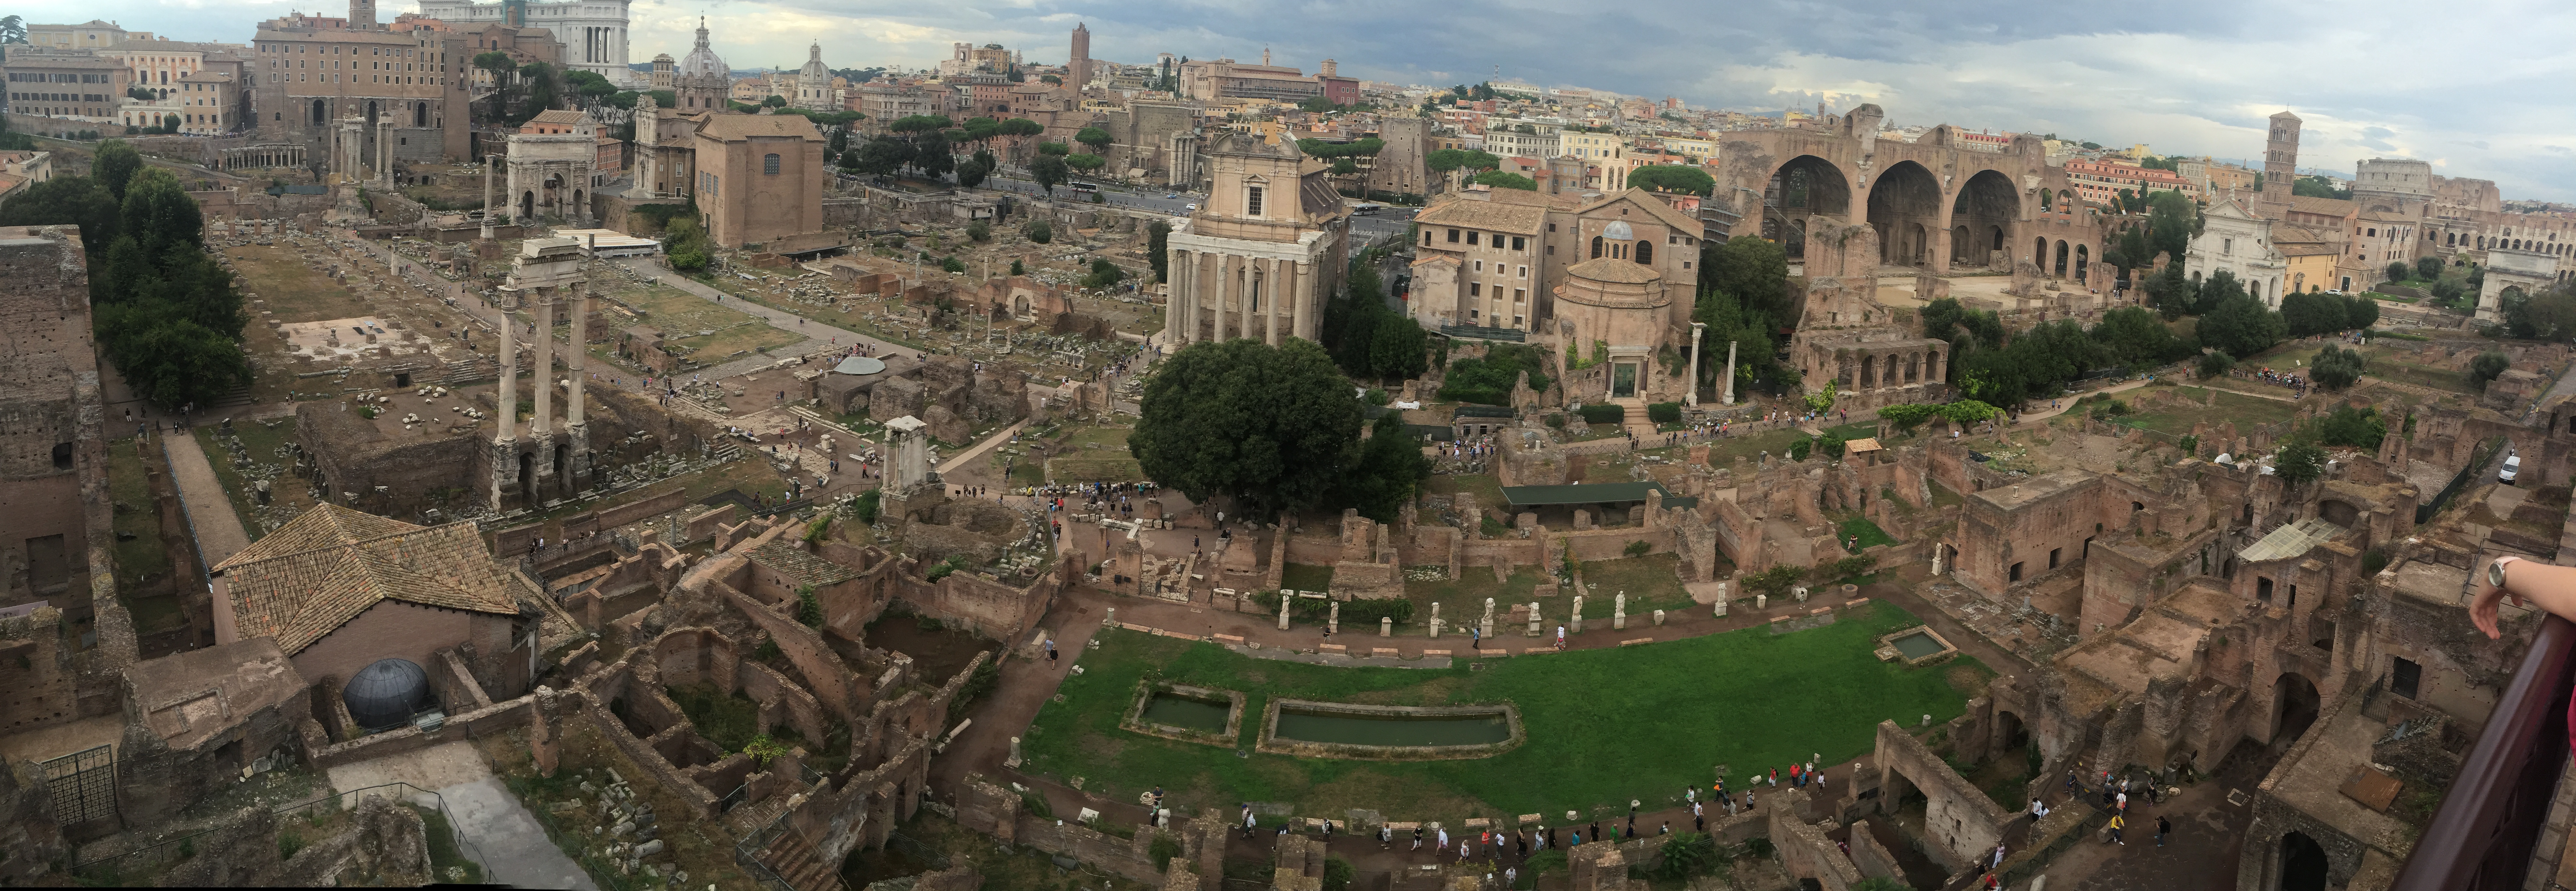 Центр древнего рима. Палатинский холм в Риме. Палатин холмы Рима. Вид на Колизей с холма палатин. Палатинский дворец Септимия севера.